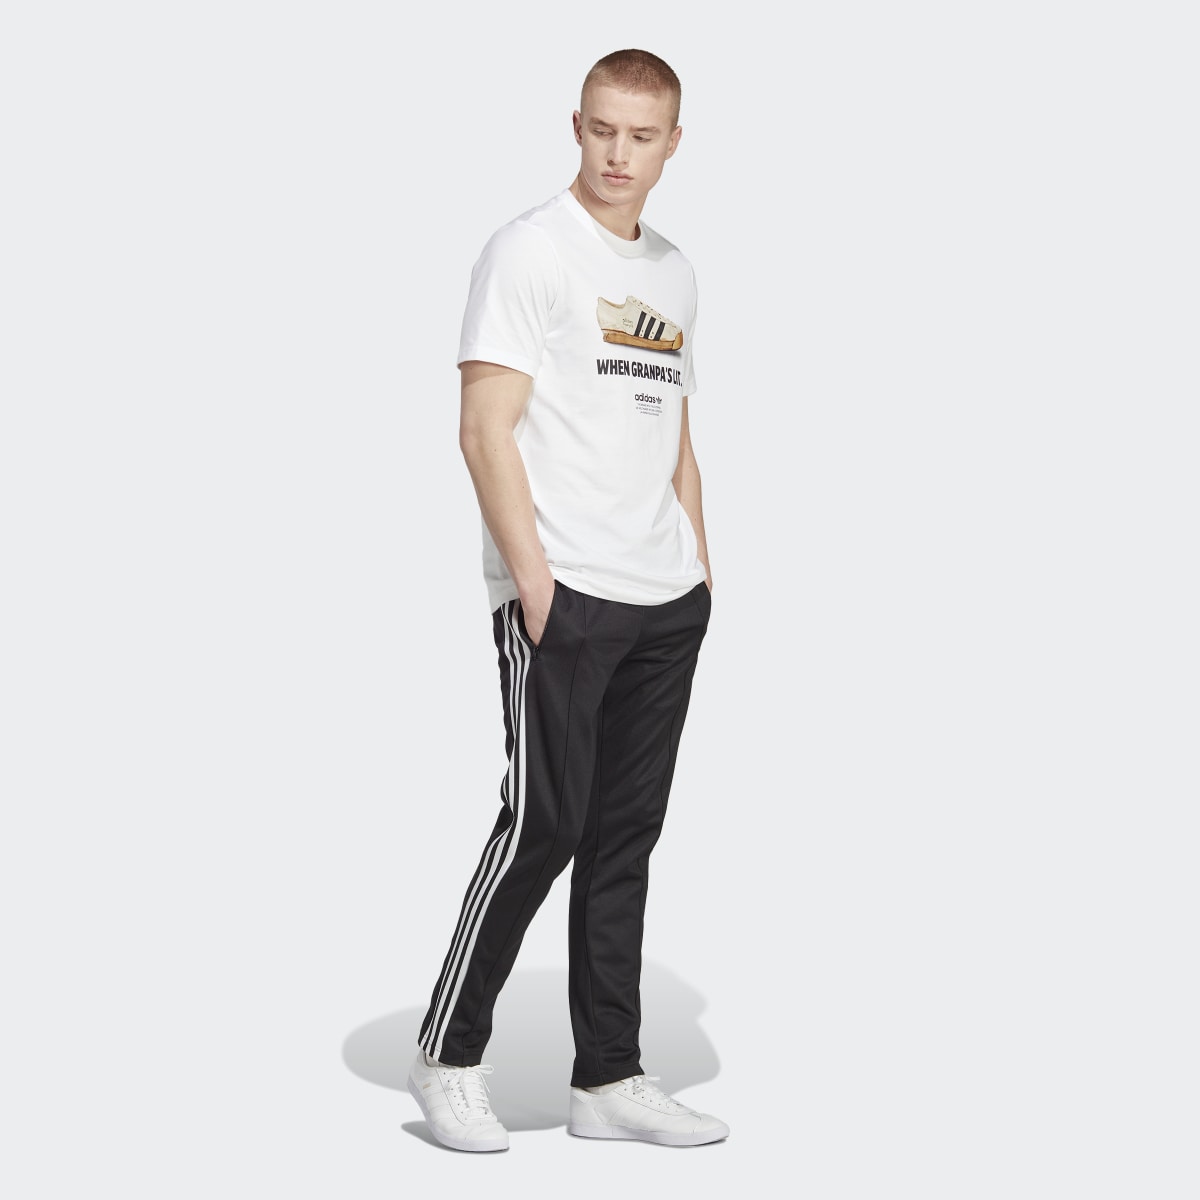 Adidas T-shirt Graphics New Age. 4